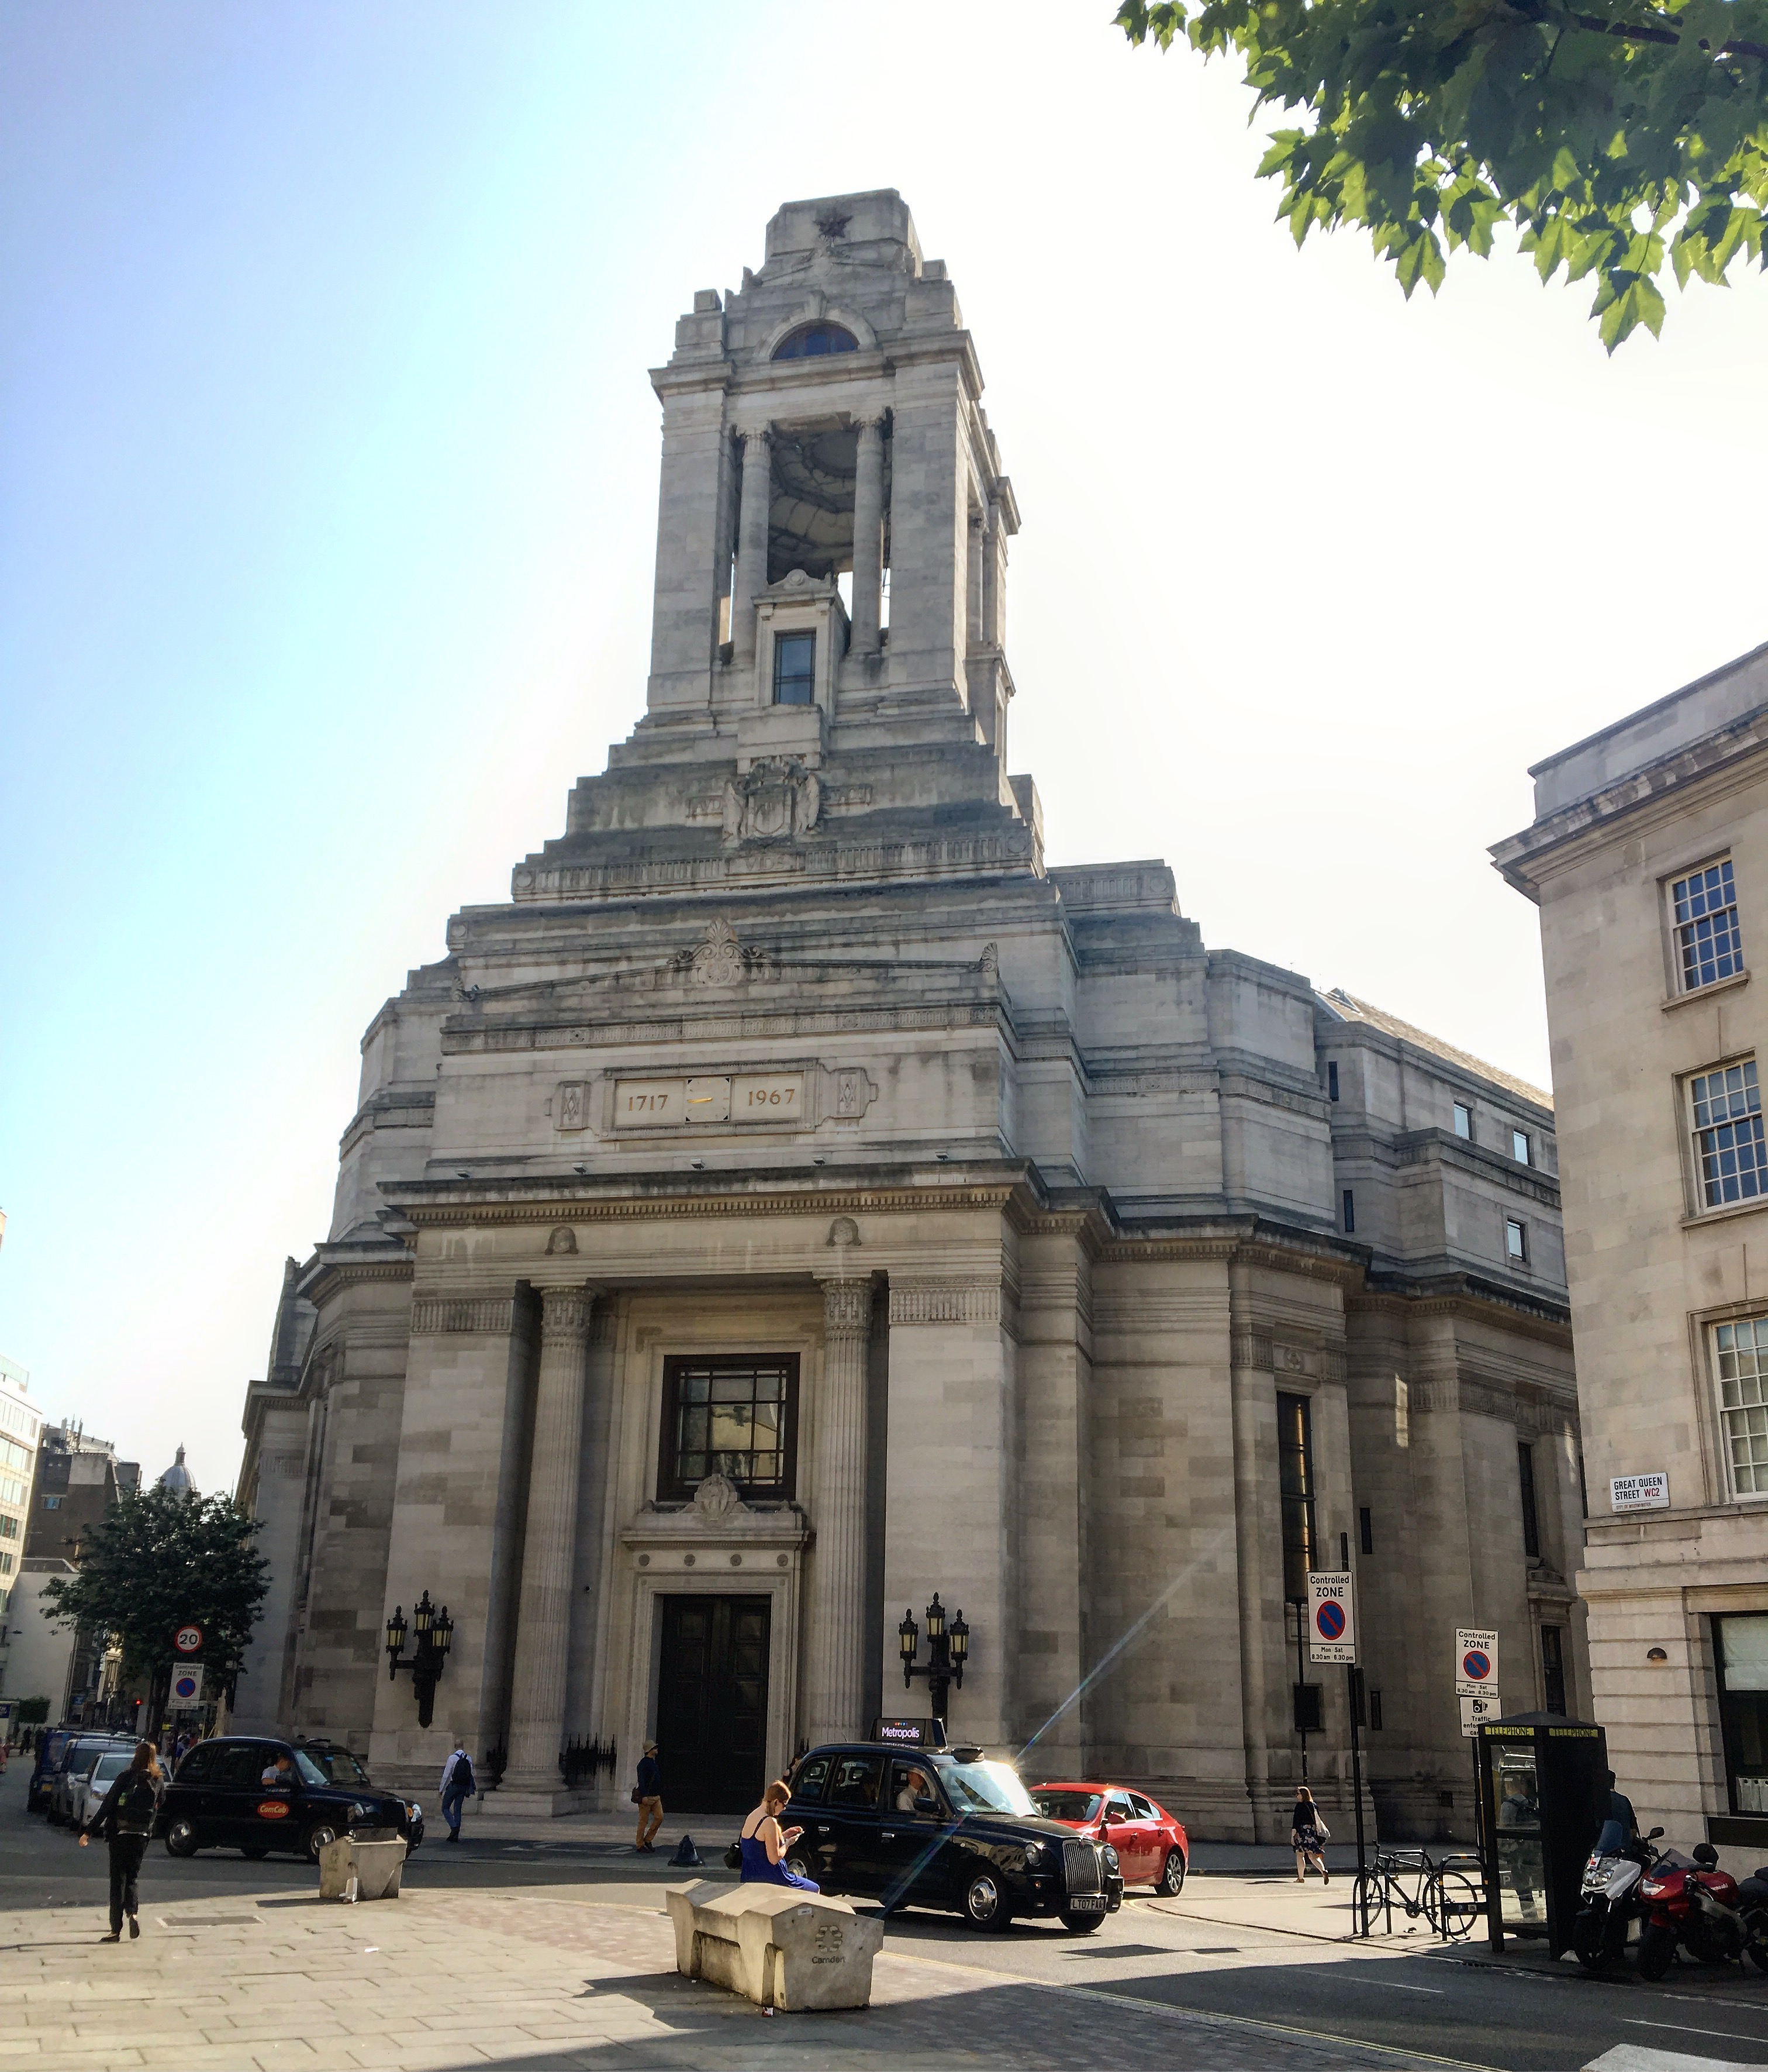 The exterior of the Freemasons' Hall